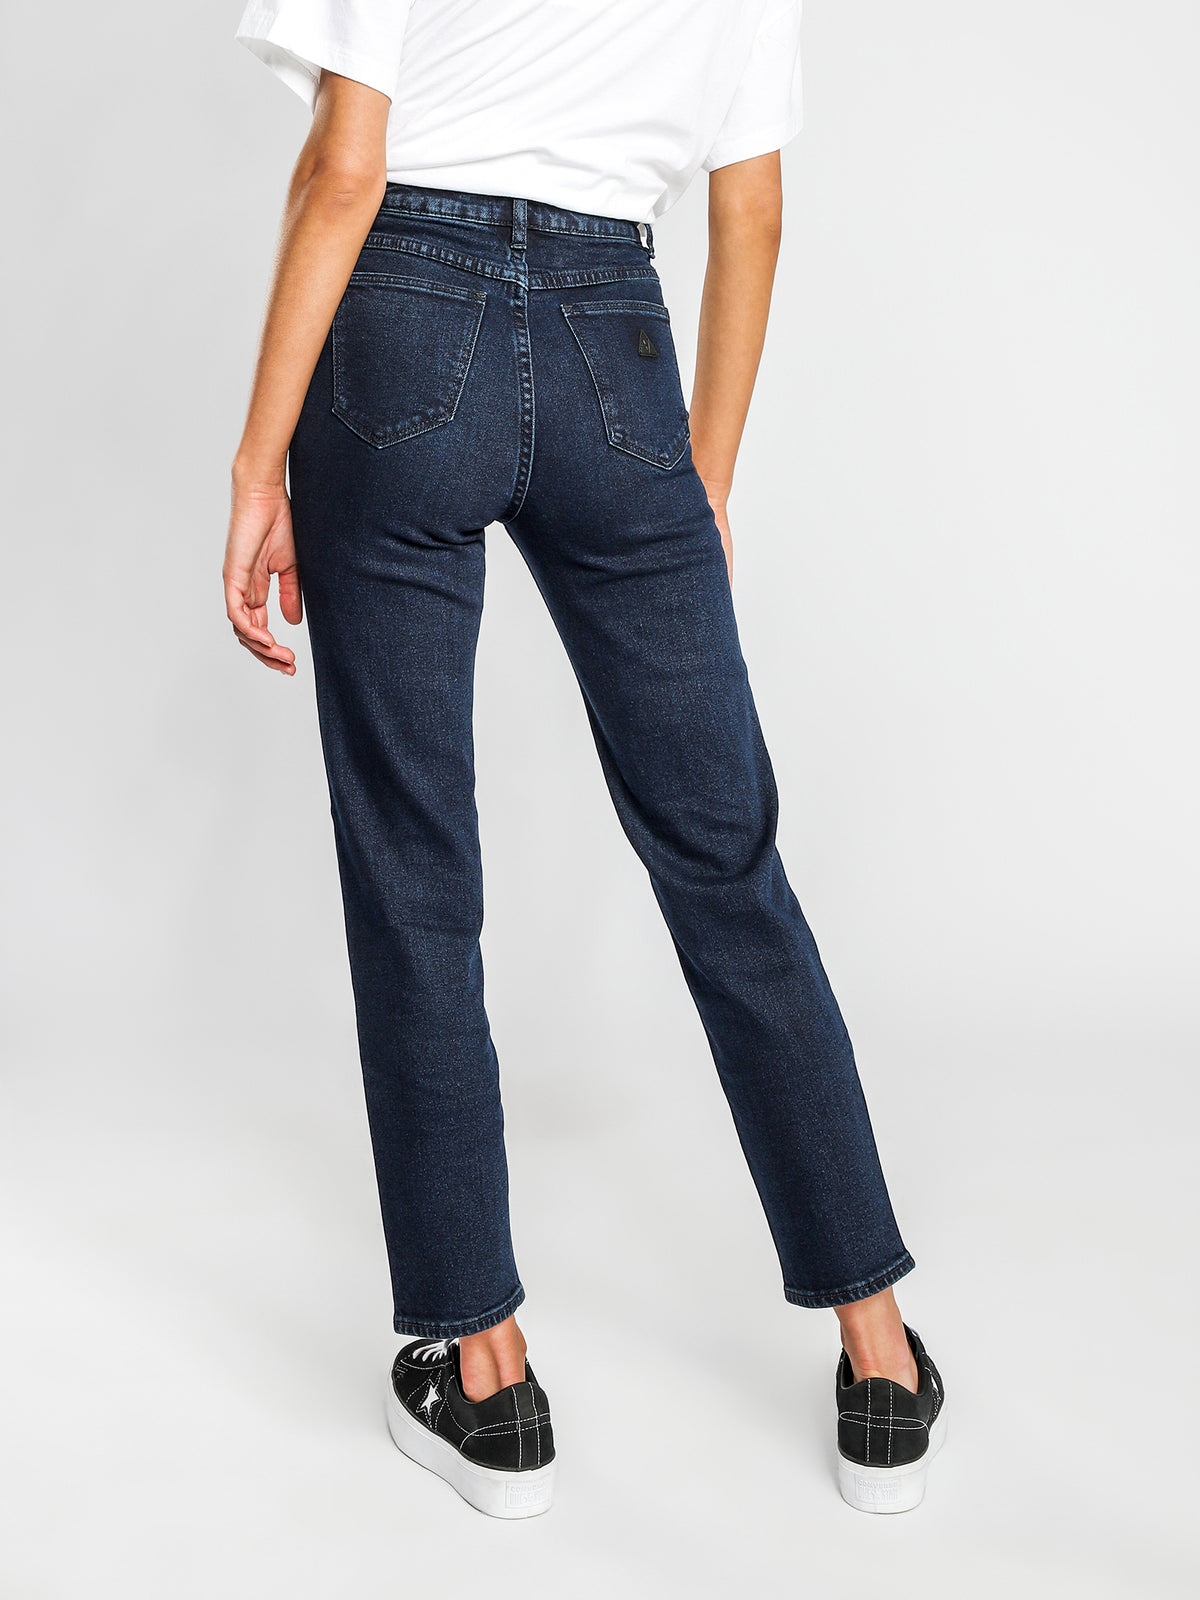 A 94 High Slim Jeans in Bonnie Blue Denim